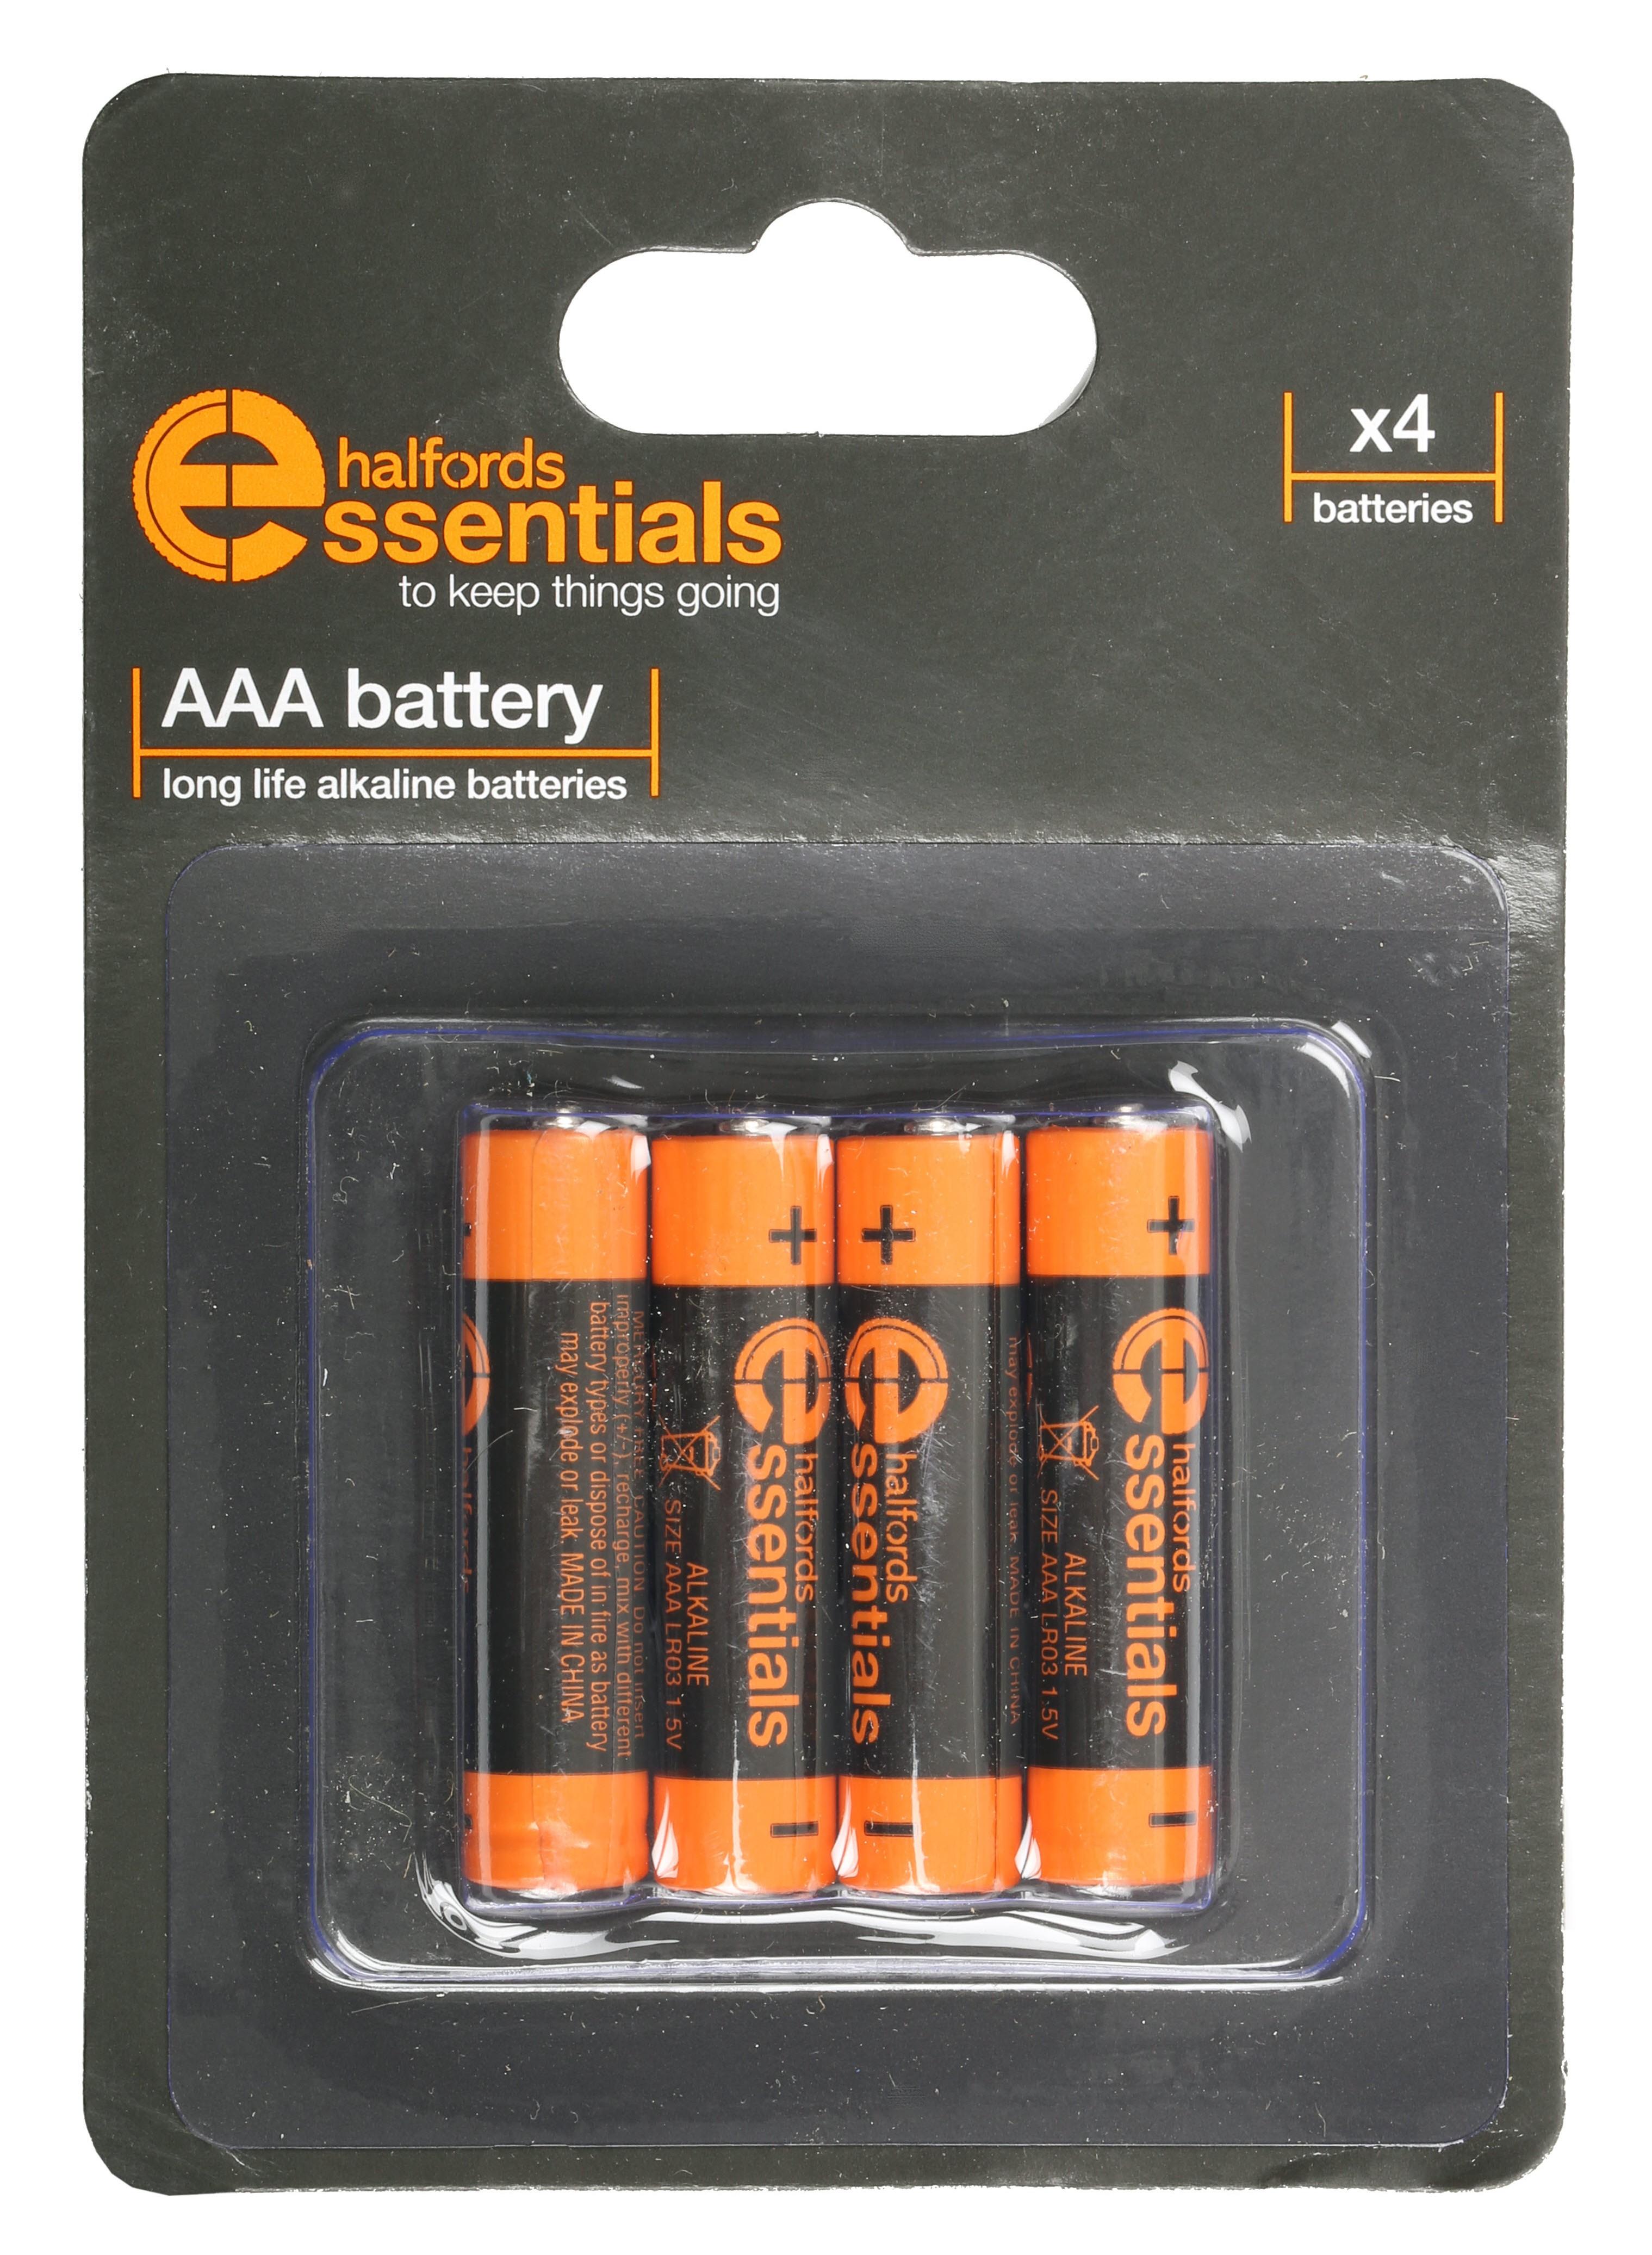 Halfords Essential Batteries Aaa X4